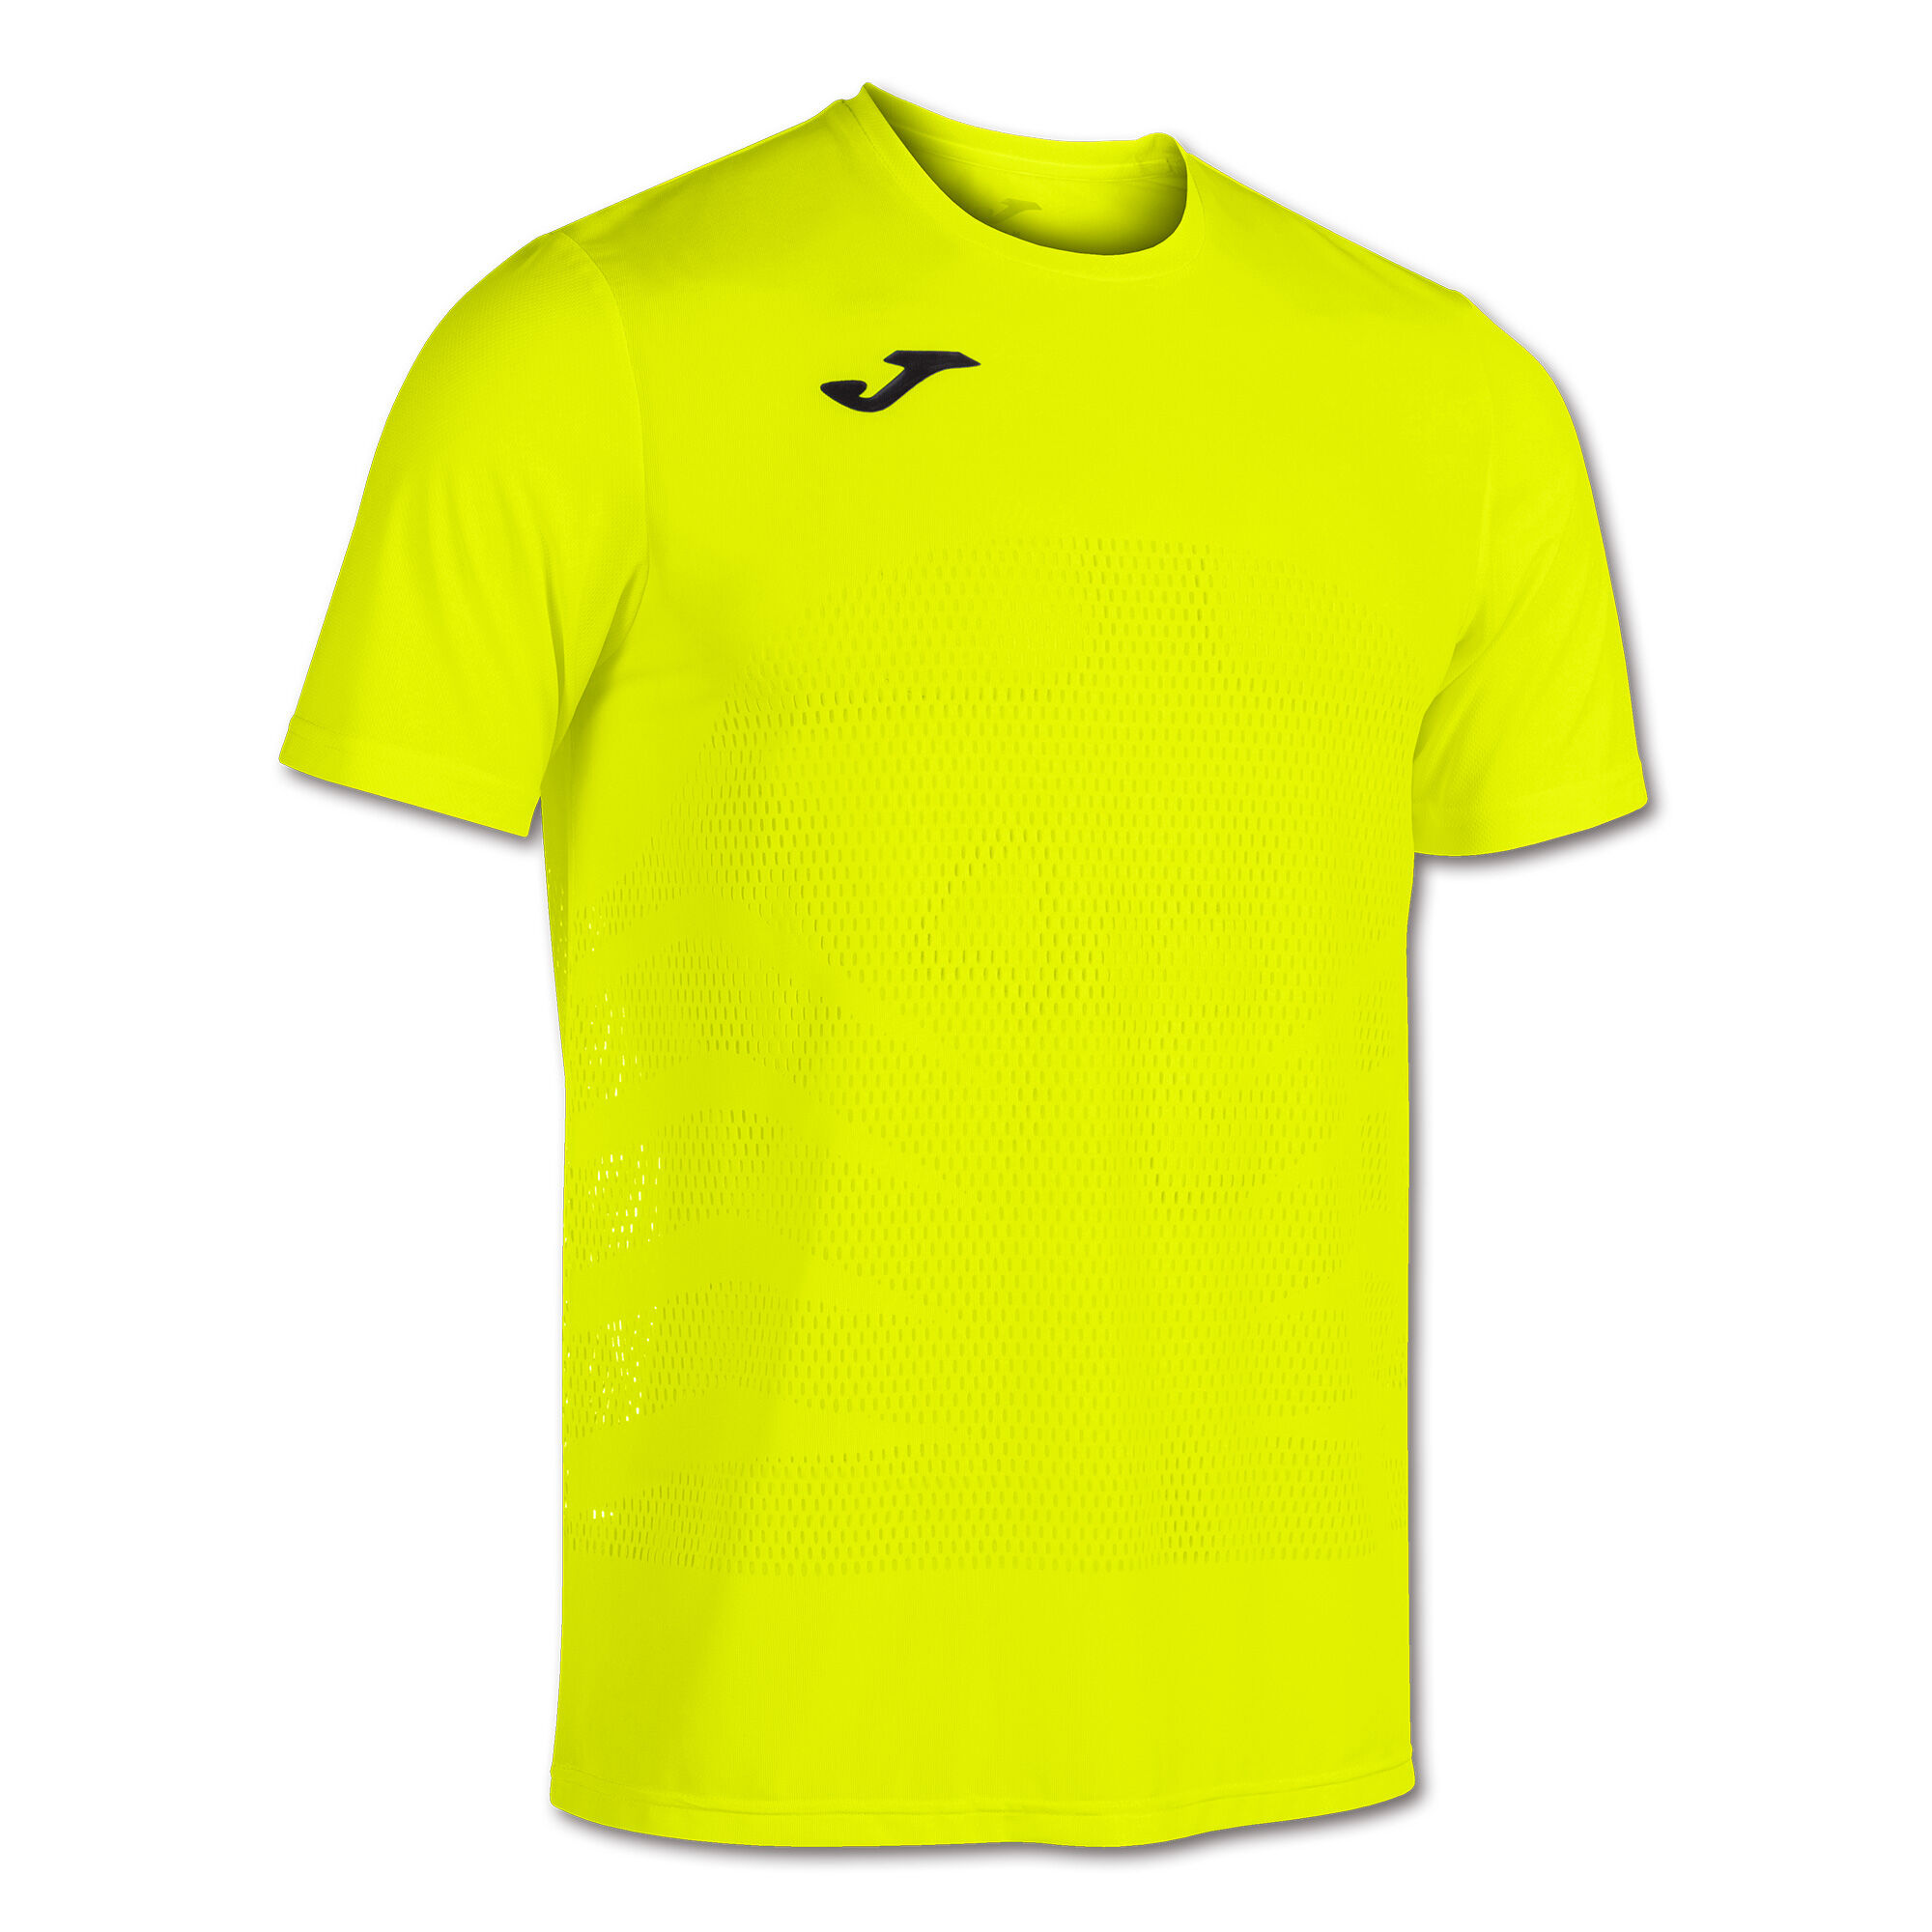 Camiseta manga corta hombre Marathon amarillo flúor